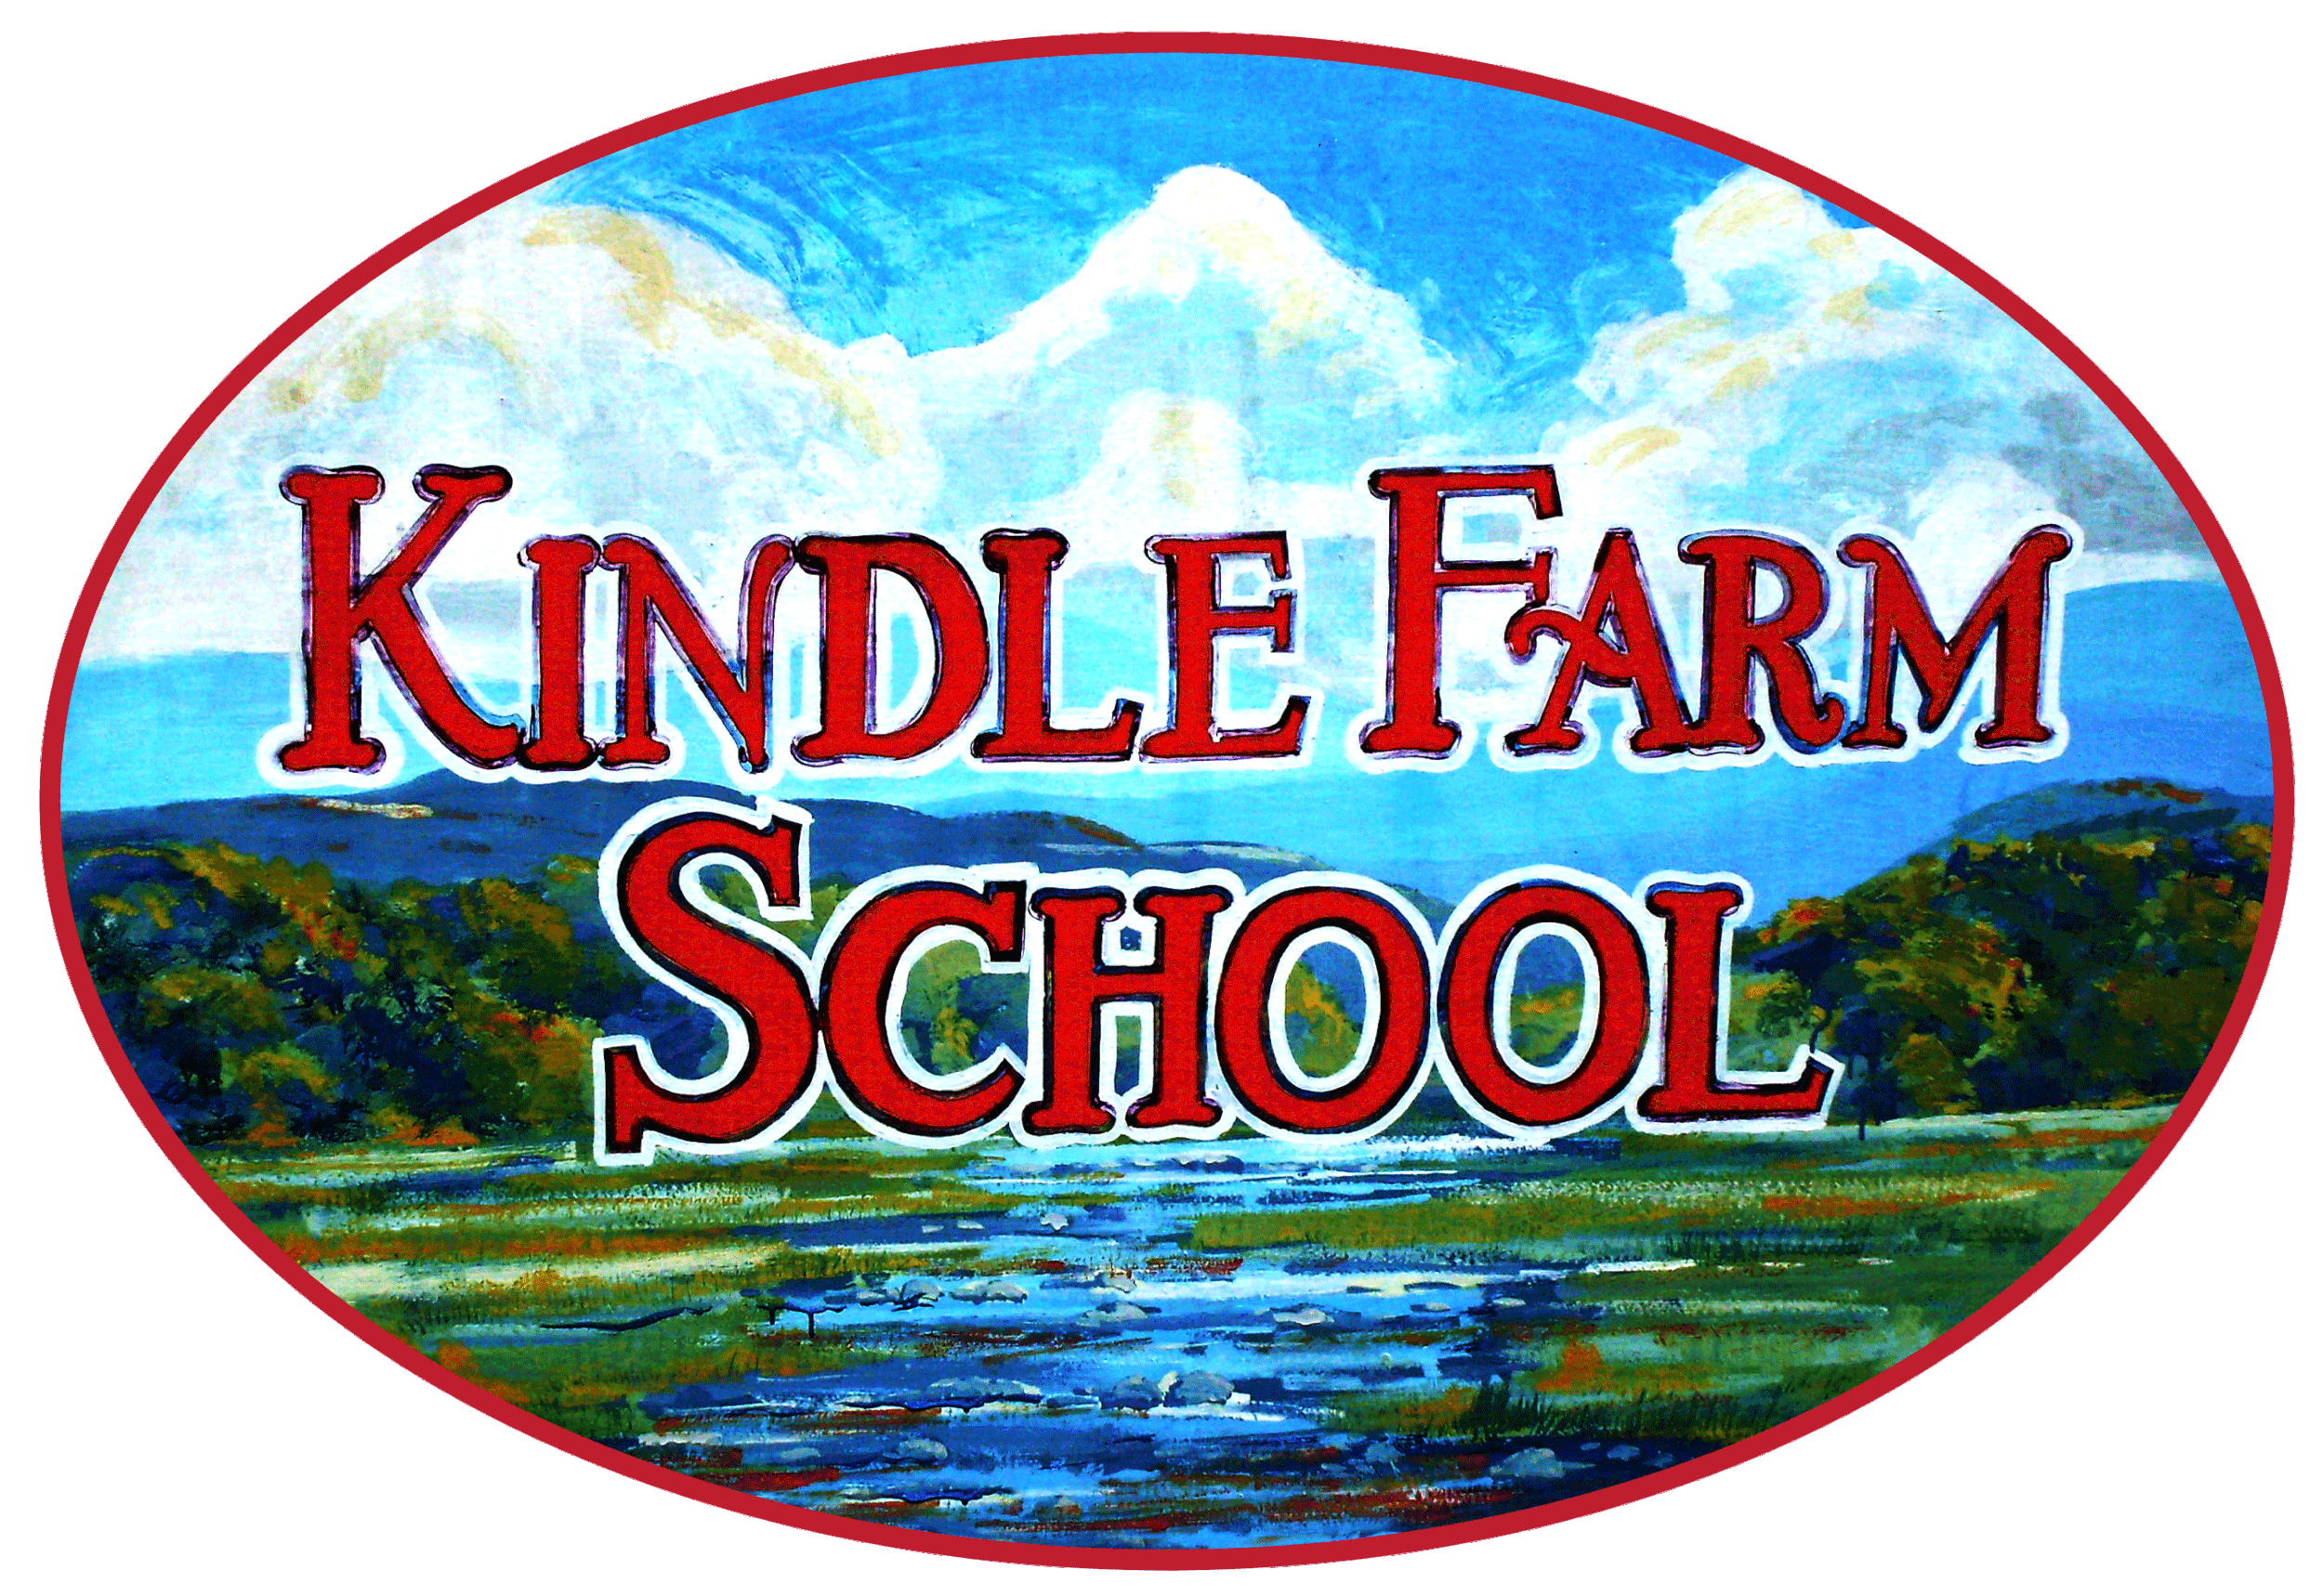 Kindle Farm School